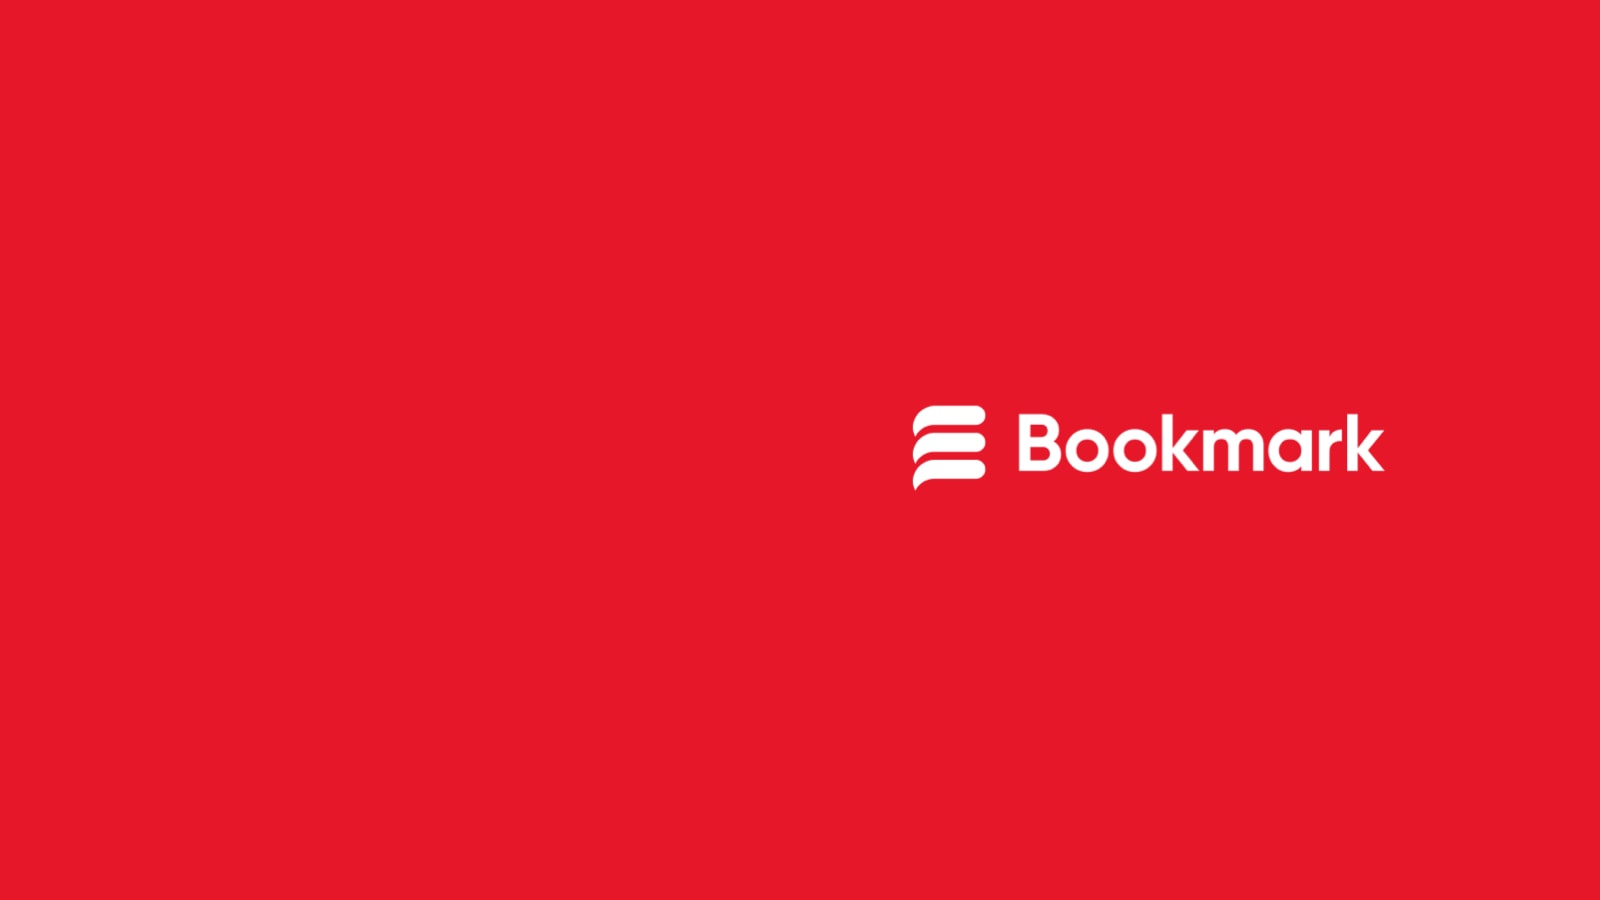 Bookmark logo.